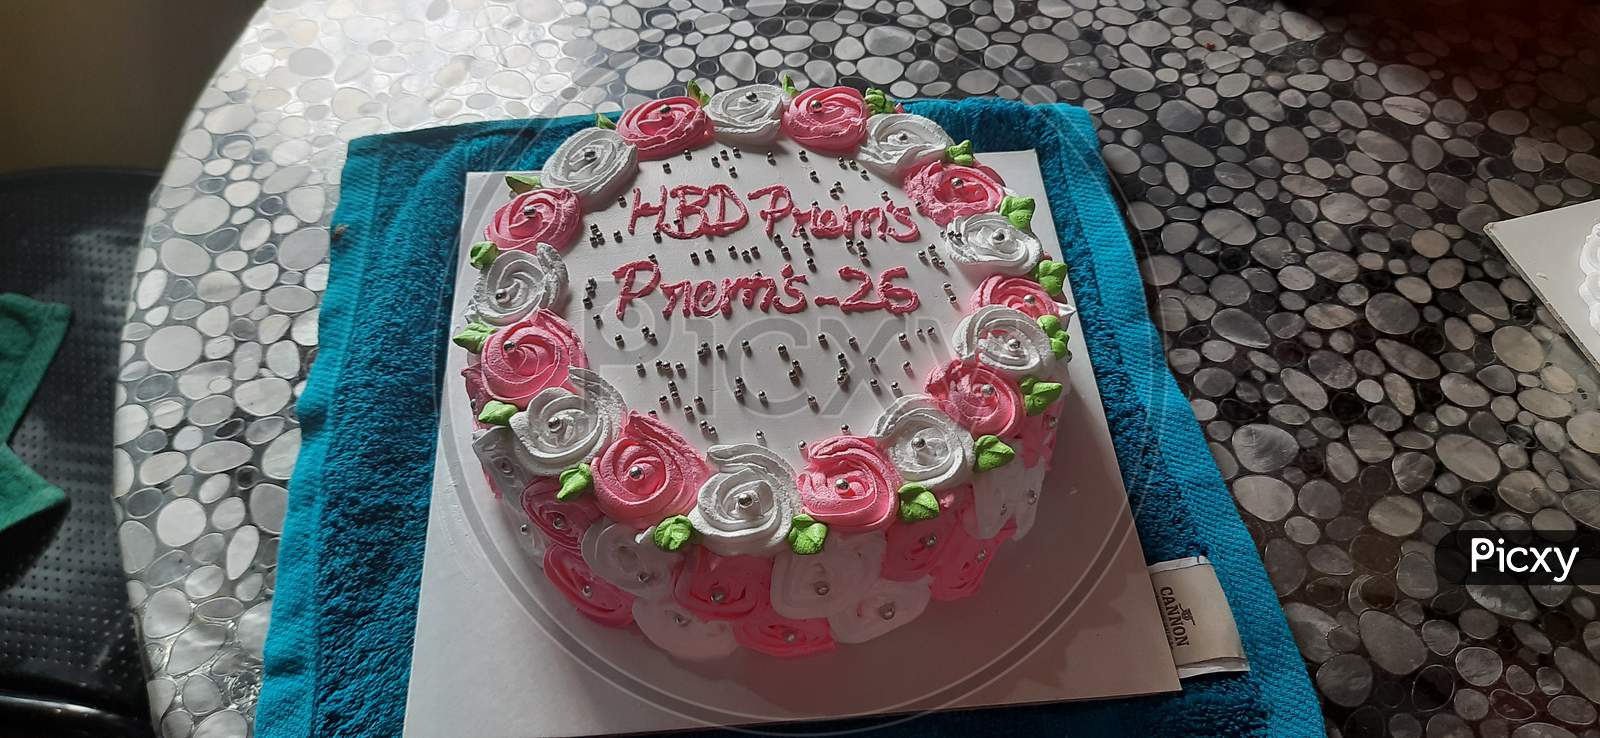 Delicious rose design birthday cake